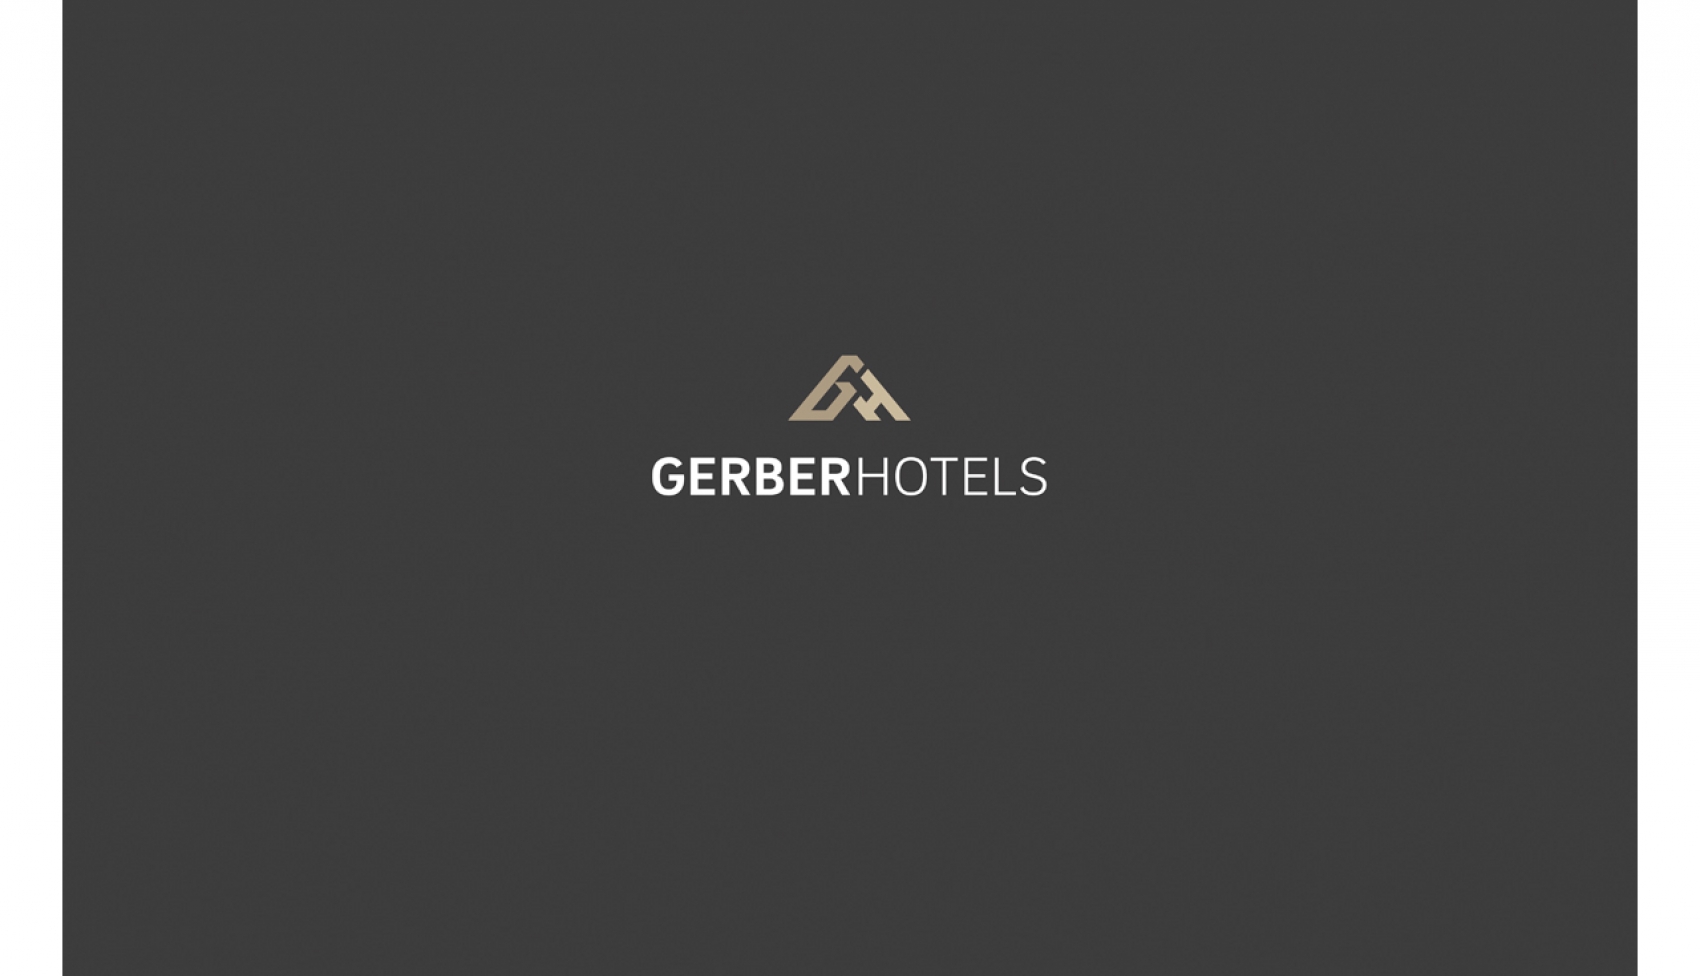 Gerber Hotels